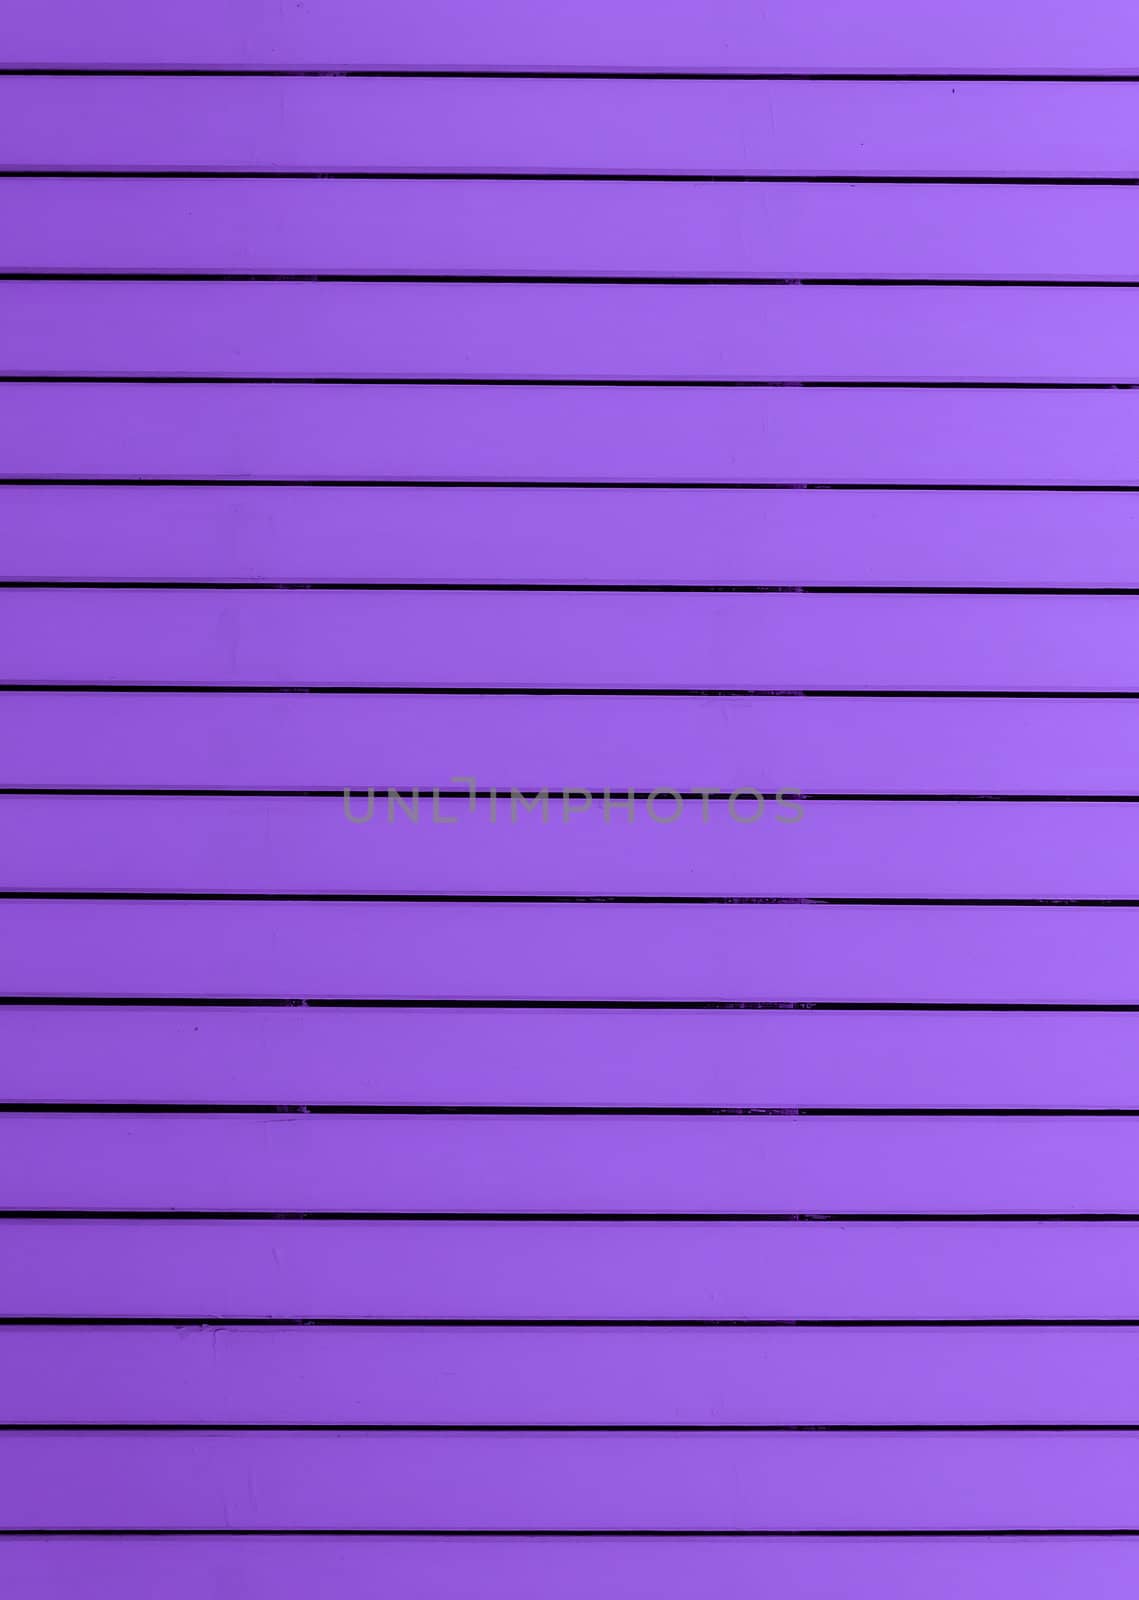 Purple Painted Wood Background, Horizontal Pattern by punpleng